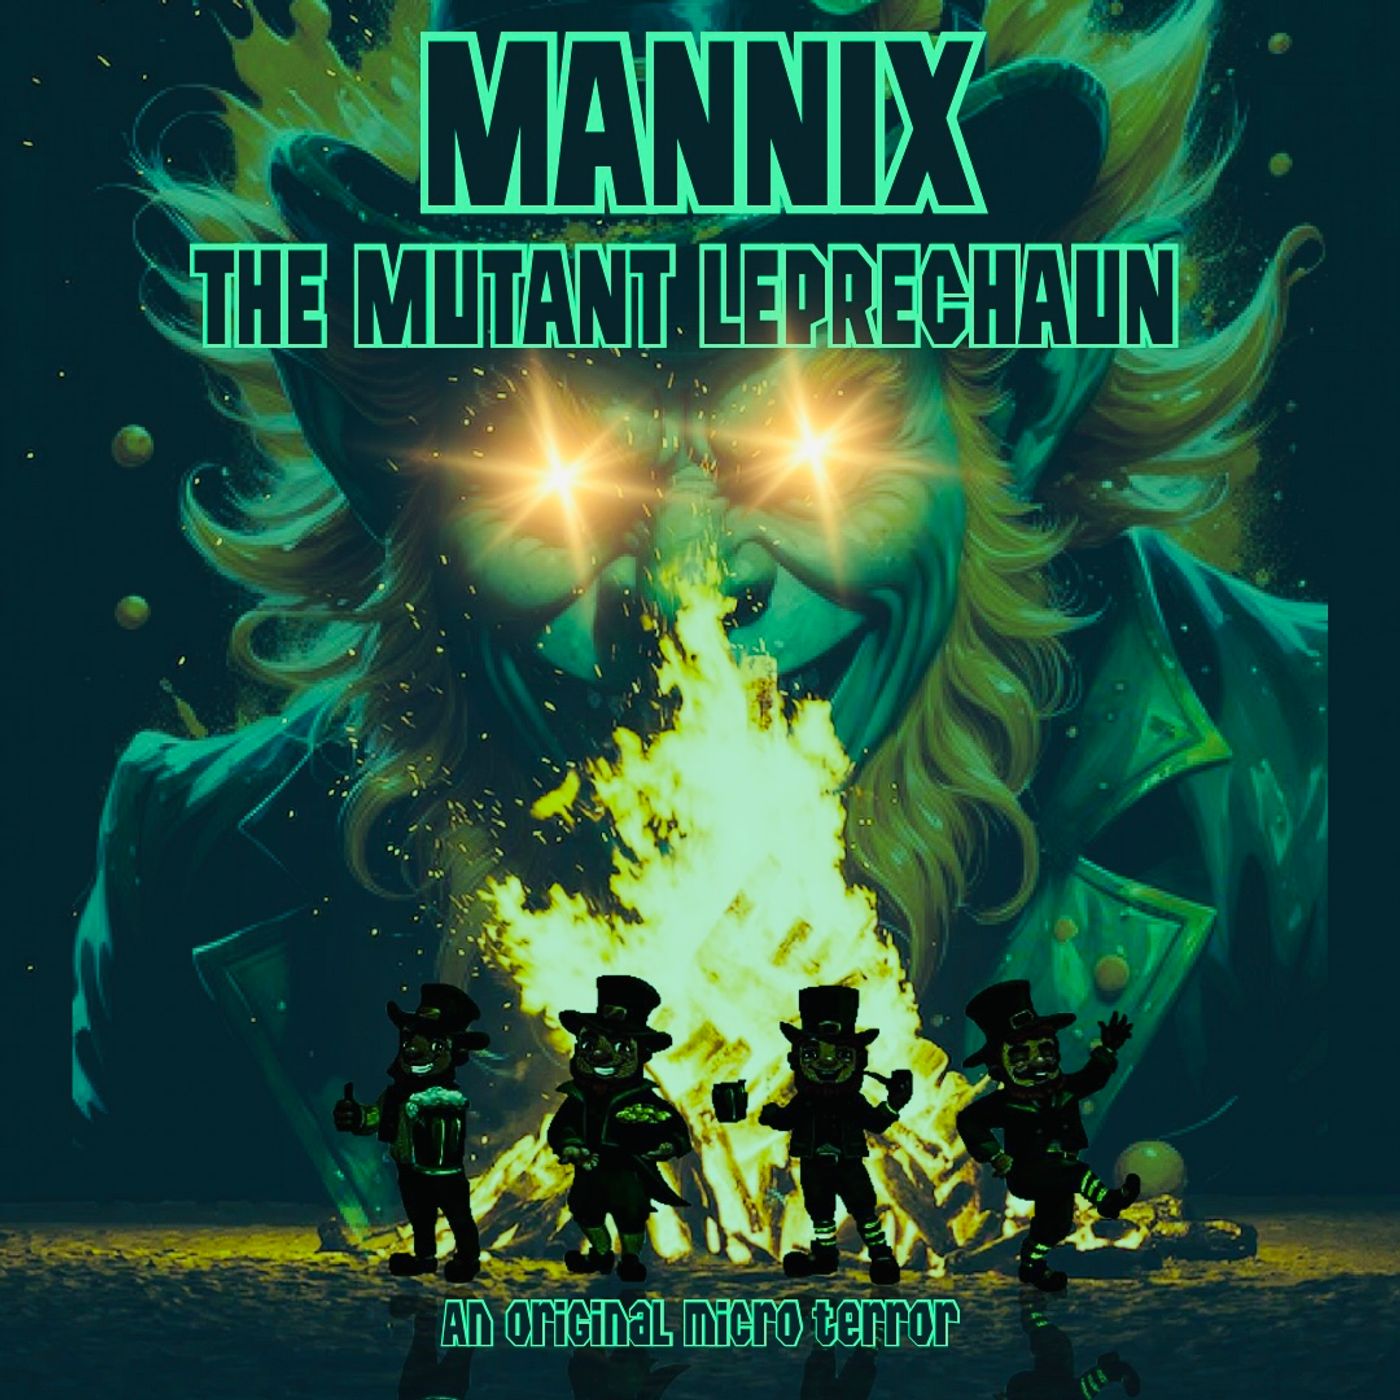 “MANNIX THE MUTANT LEPRECHAUN” by Scott Donnelly #MicroTerrors